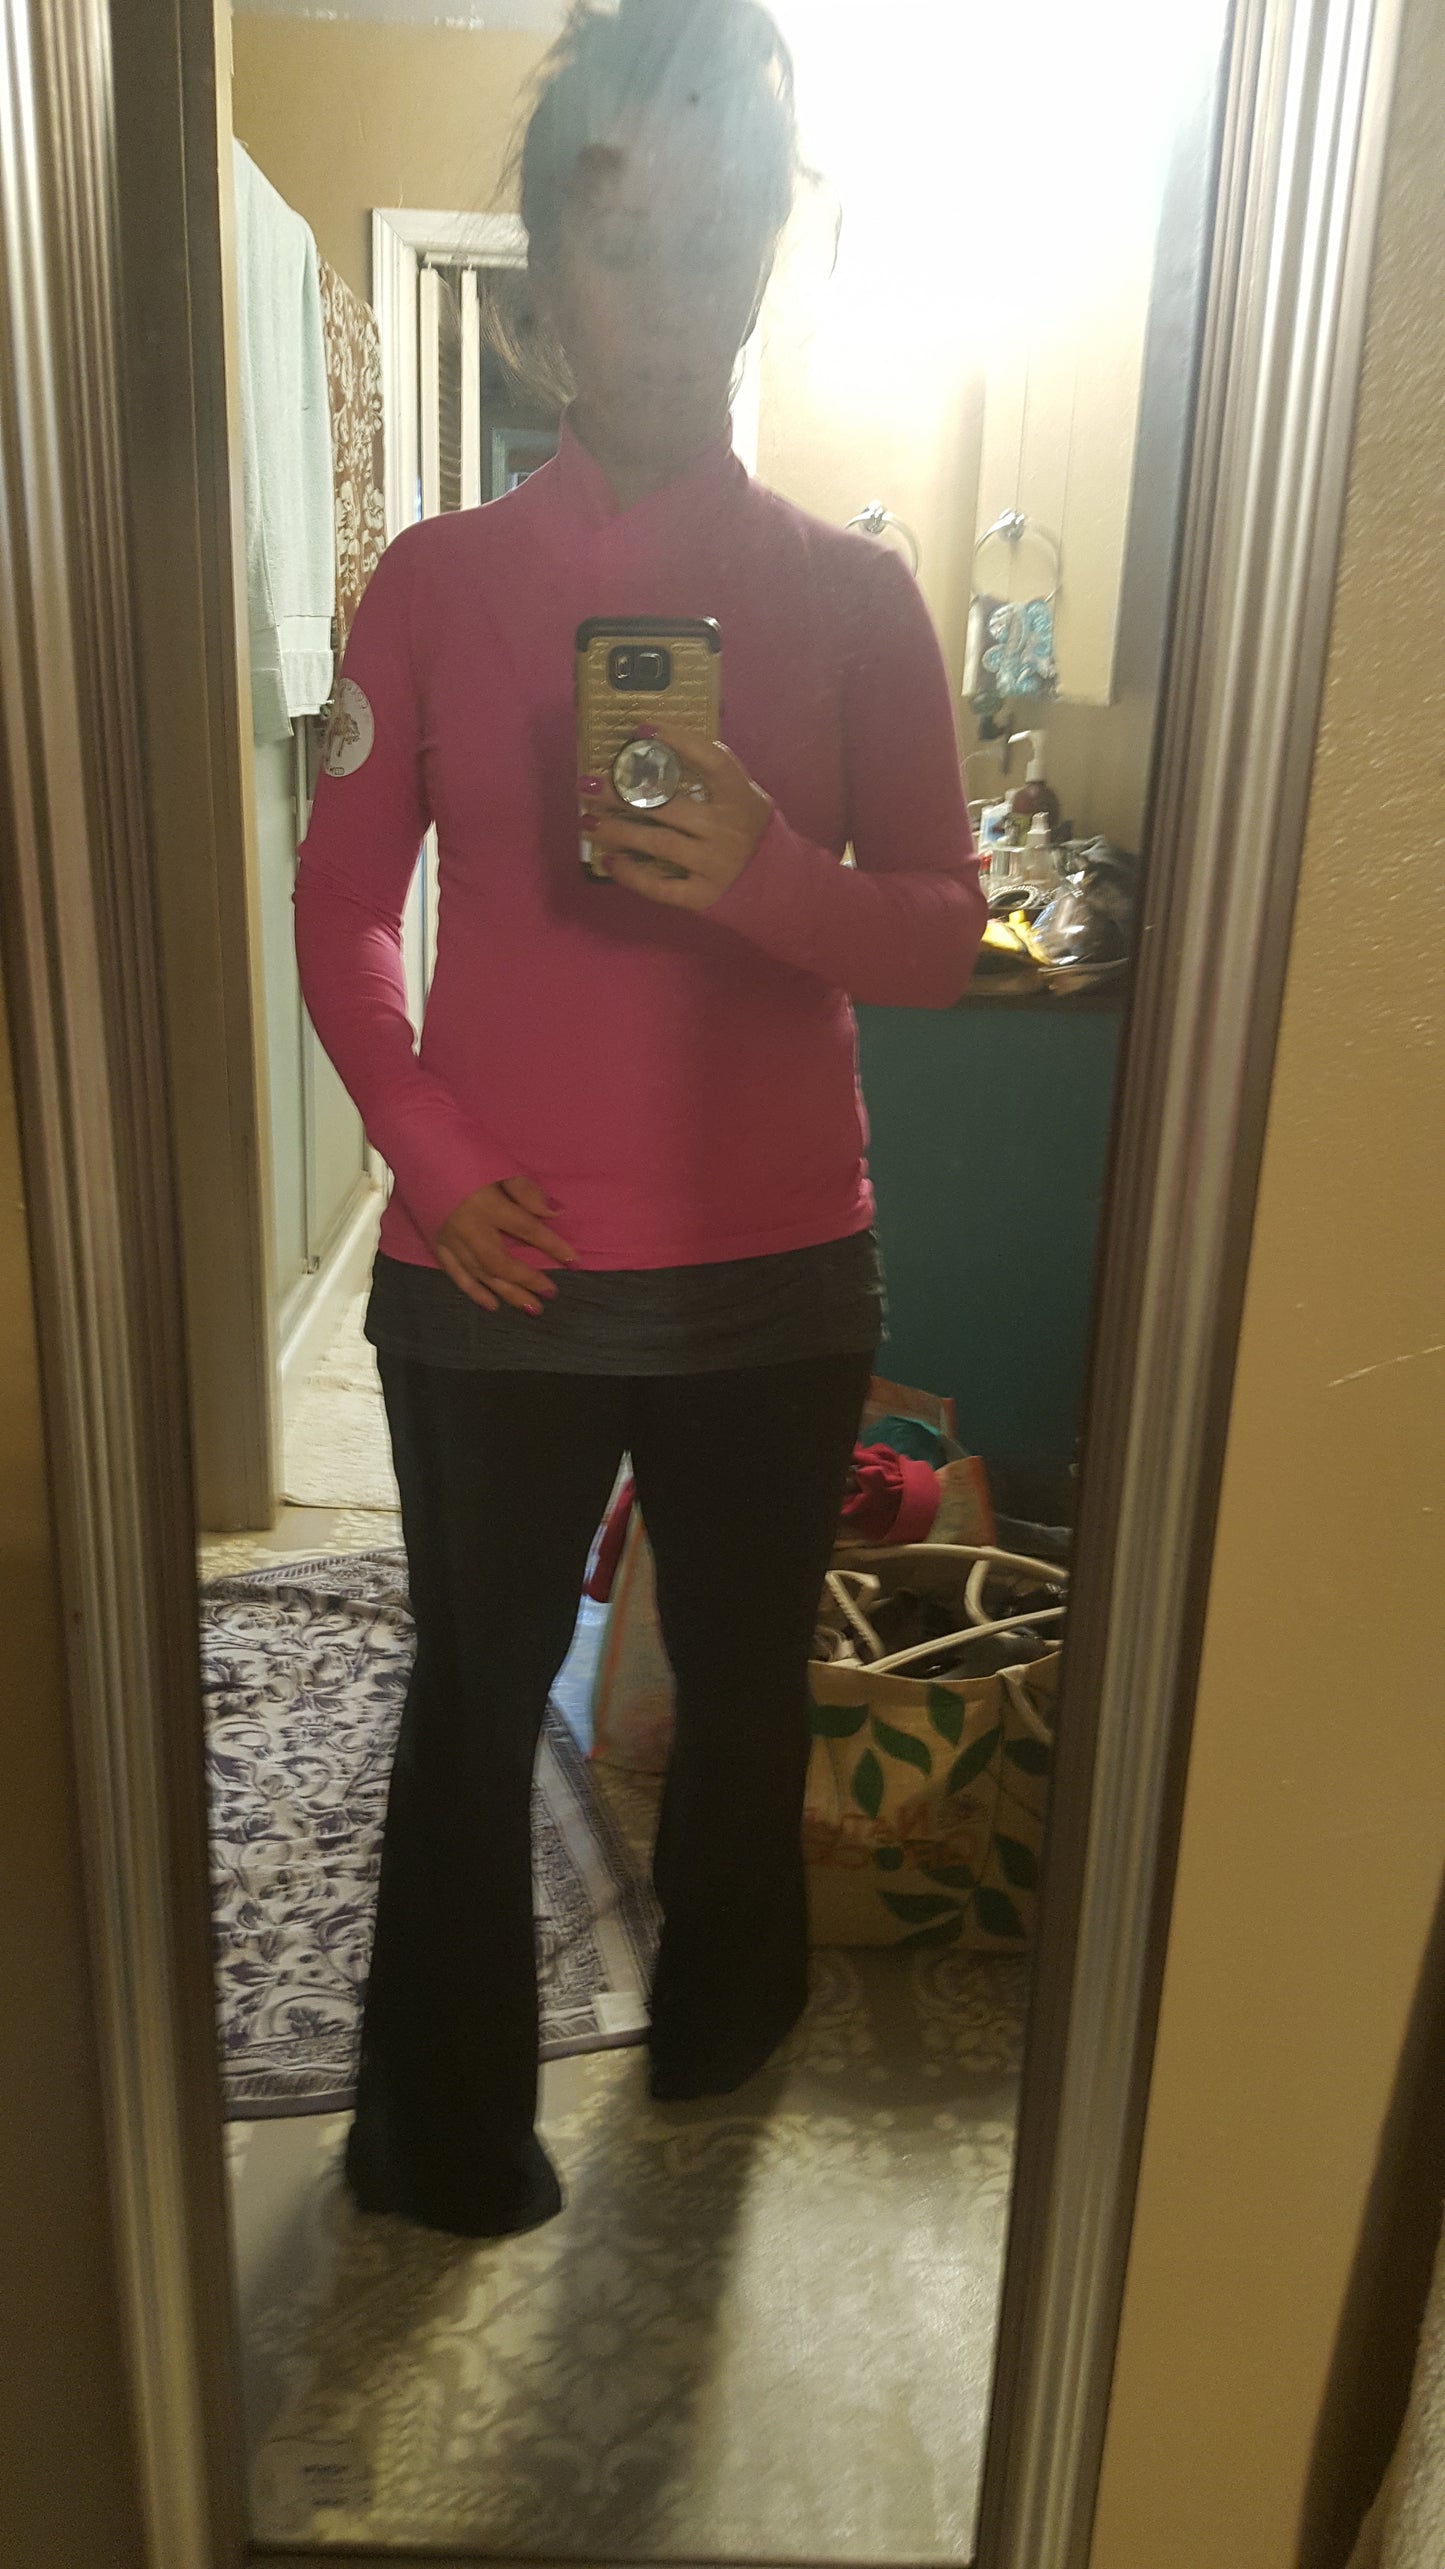 Pink logo pullover long sleeve tee SALE